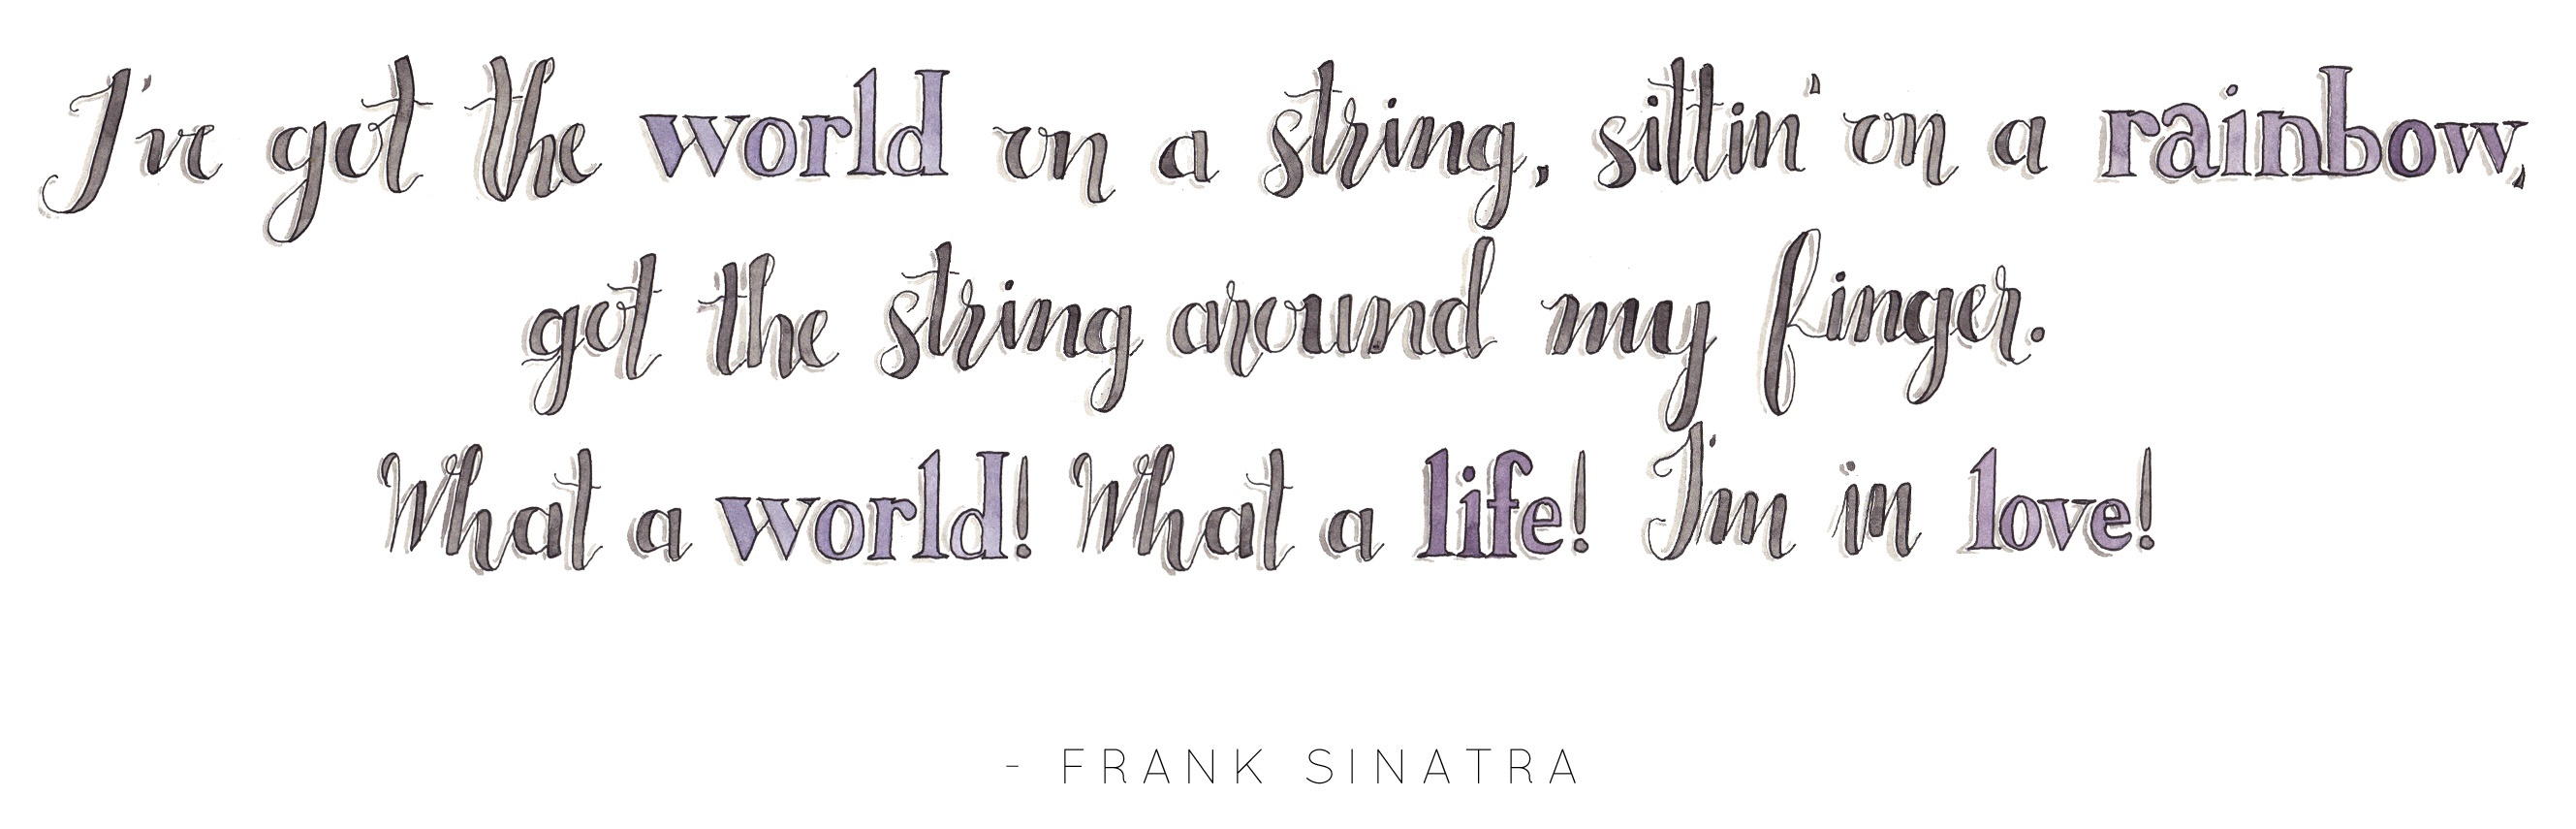 Frank Sinatra Watercolor Quote | Nikki Tran Blog | www.nikkitranphotography.com